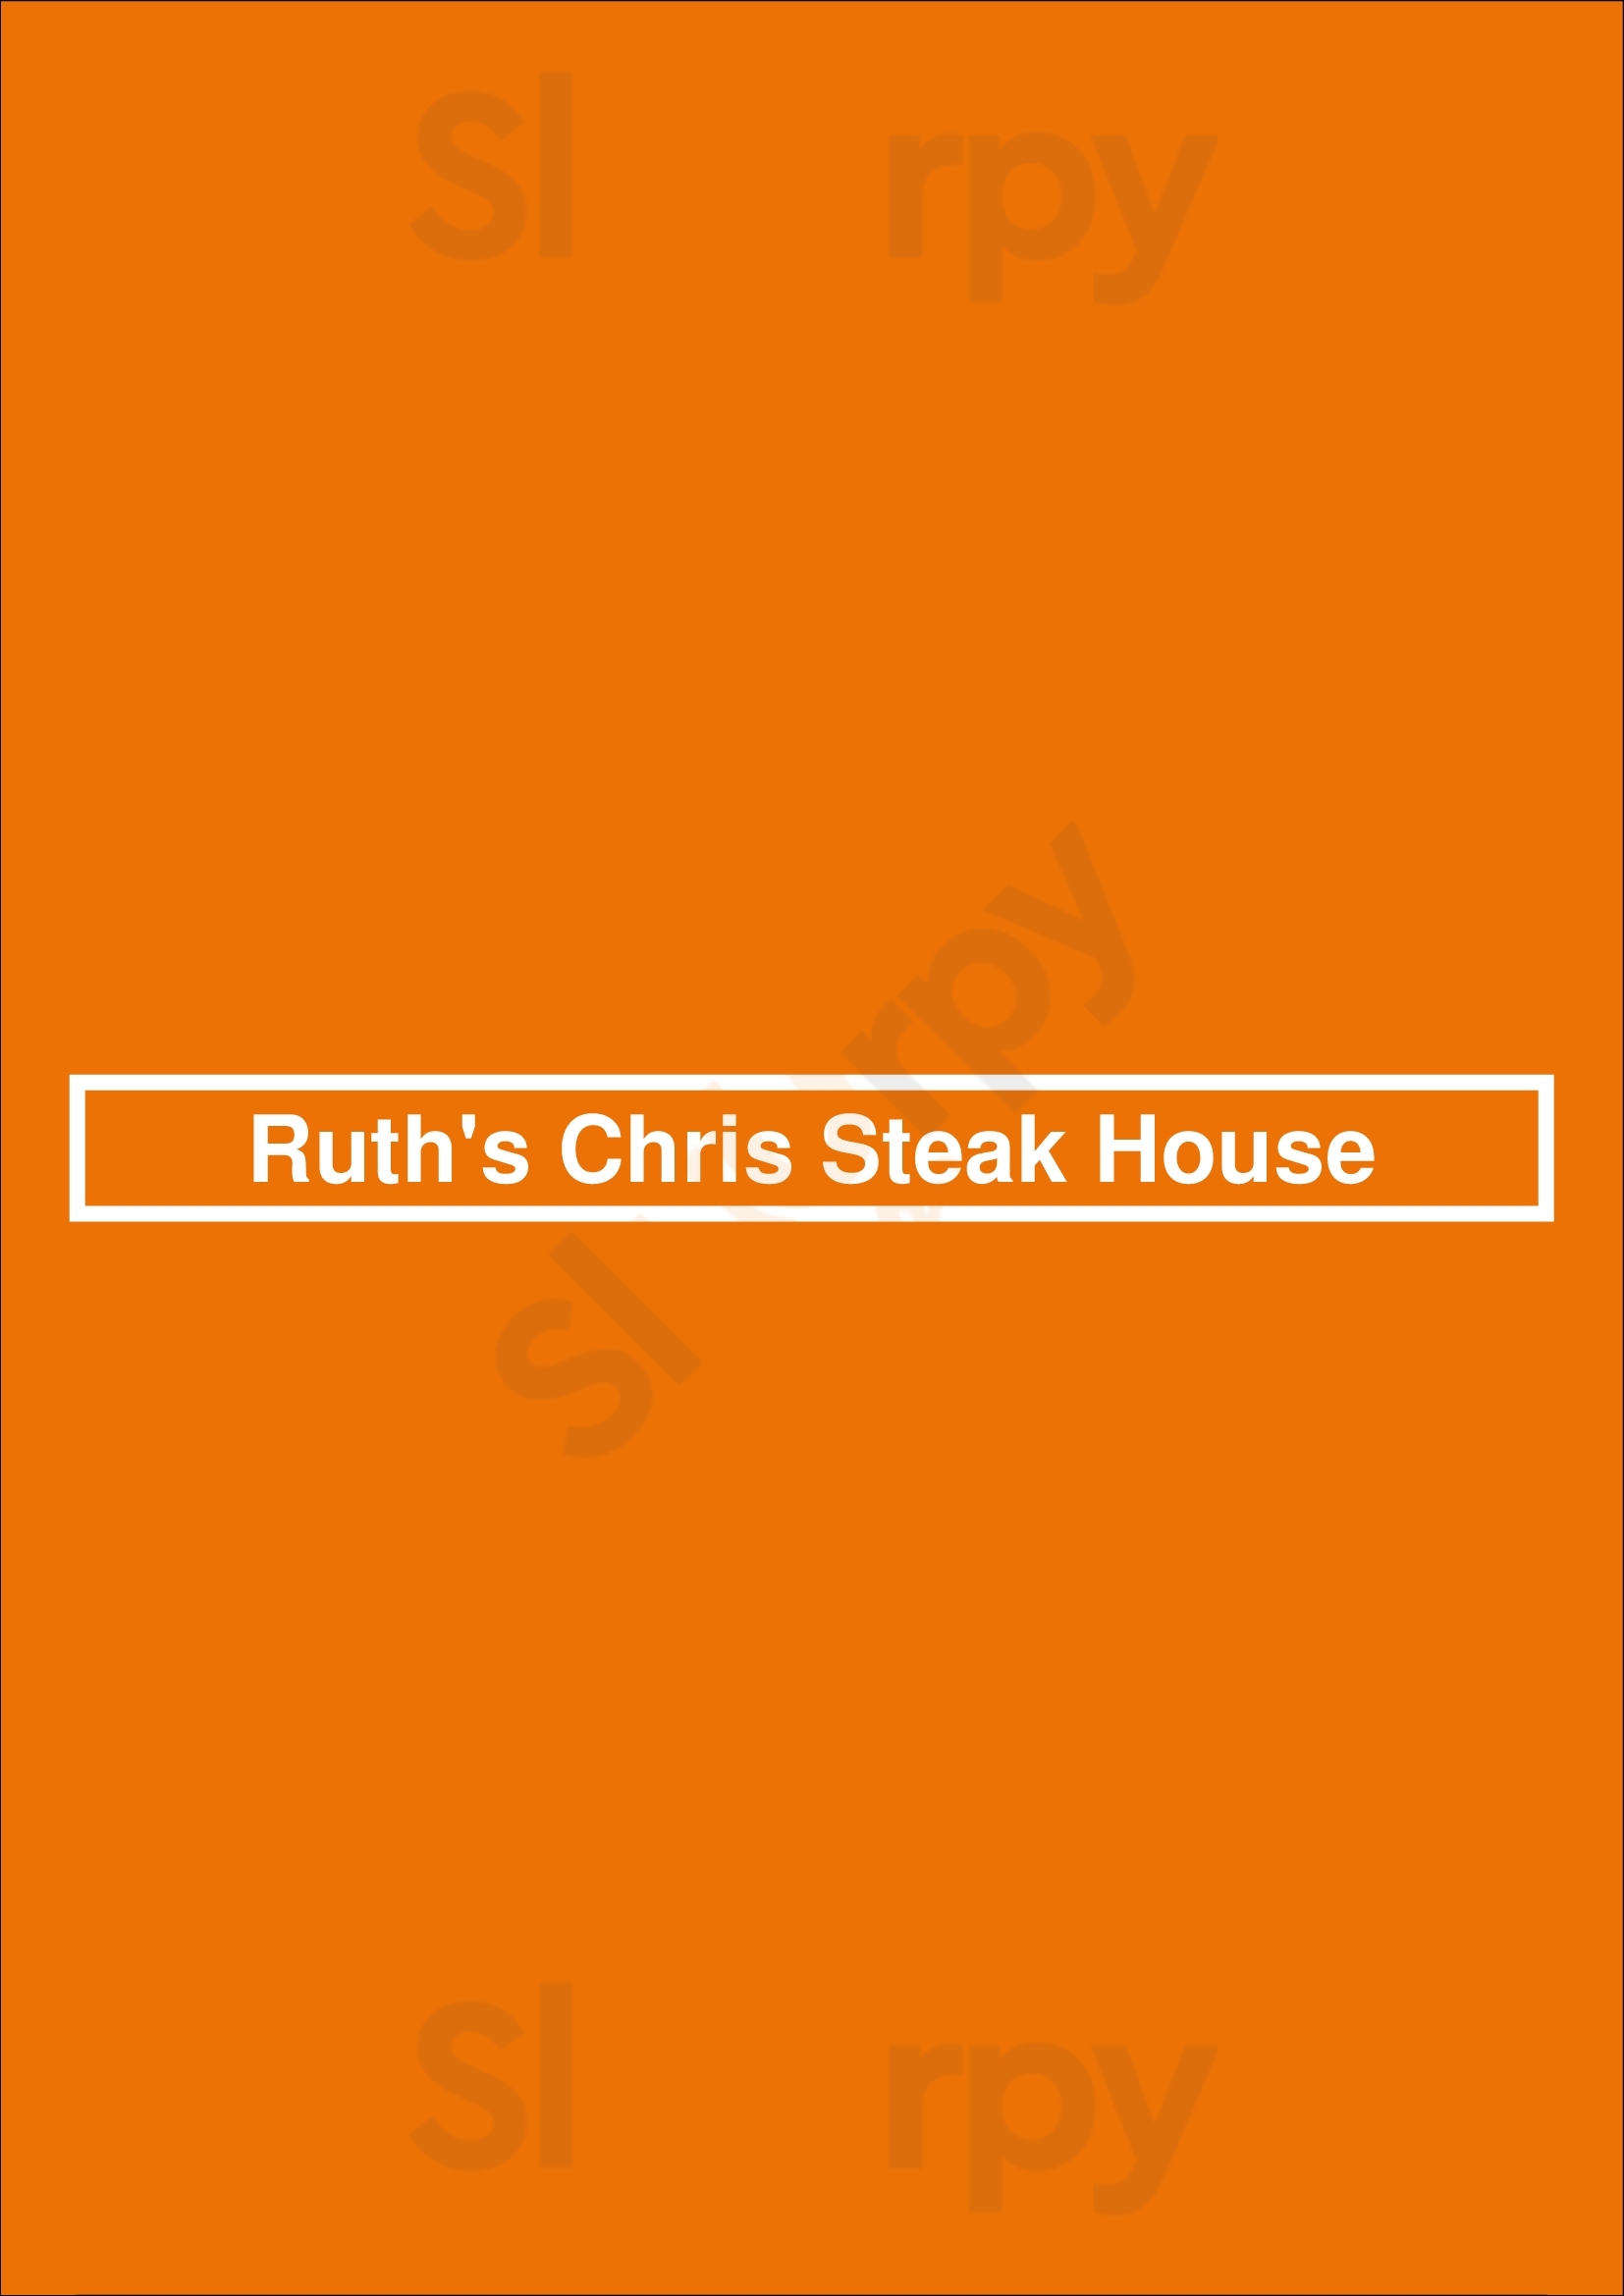 Ruth's Chris Steak House Orlando Menu - 1